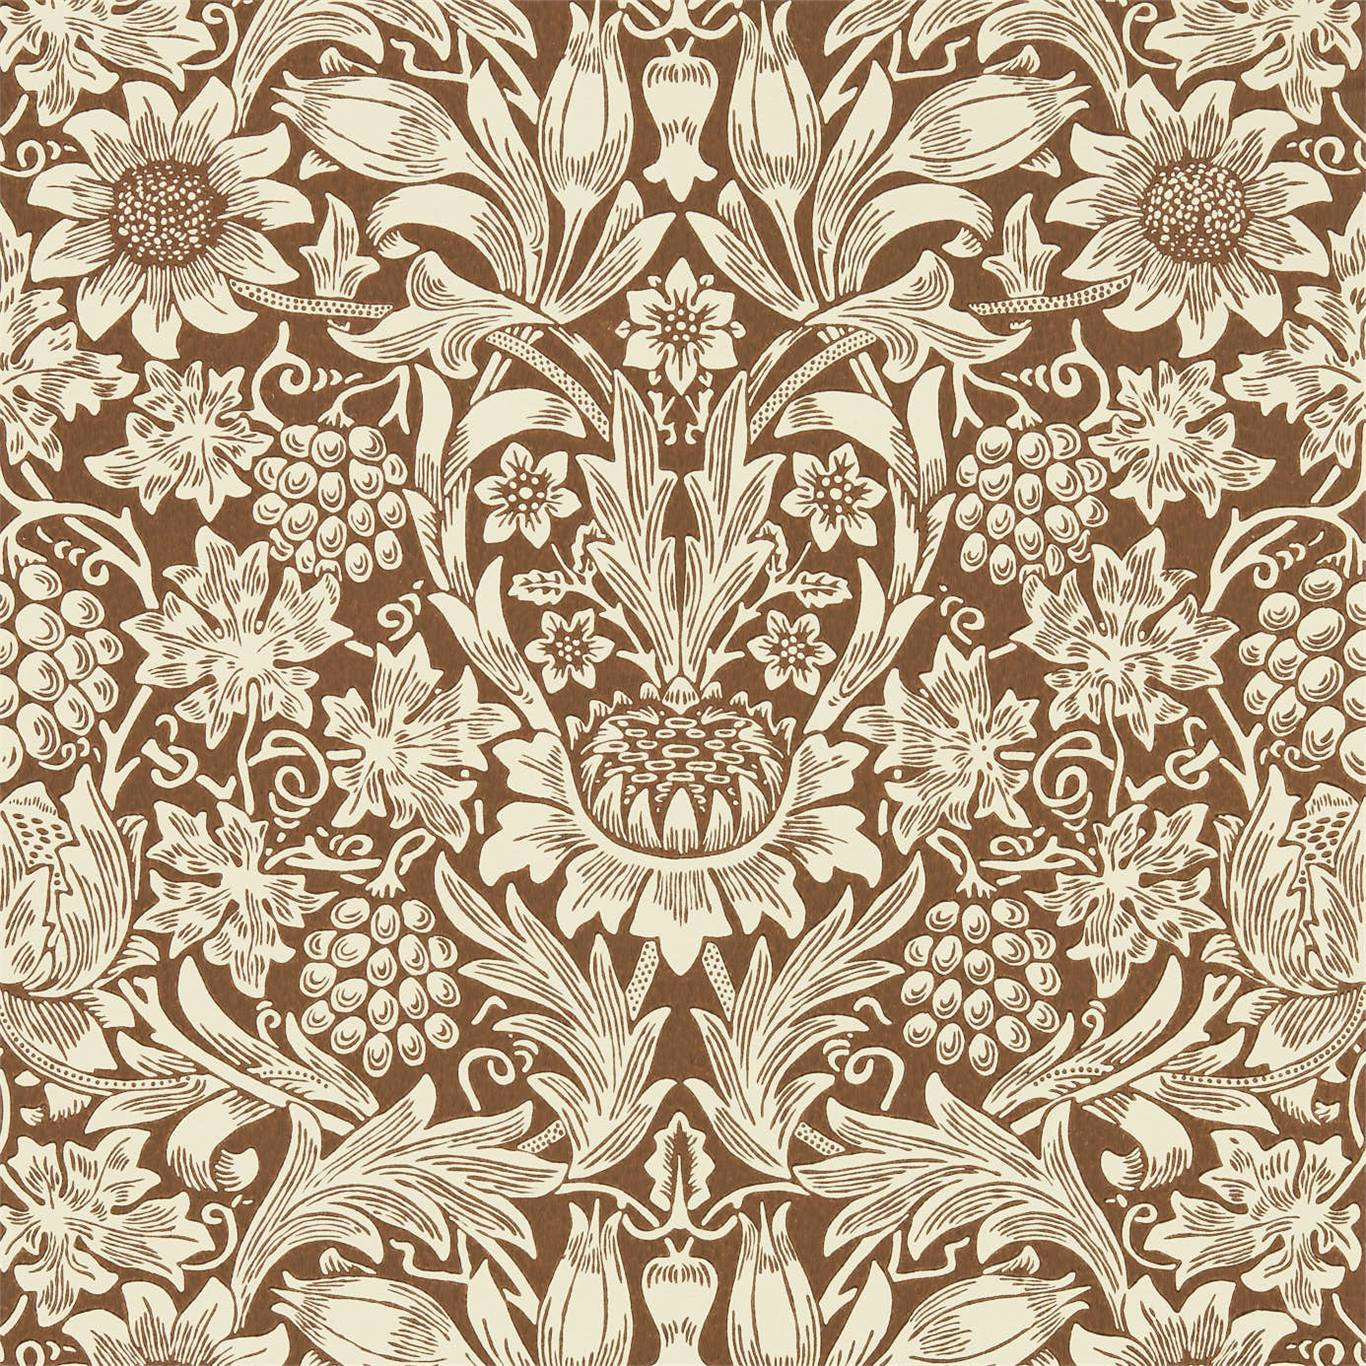 Sunflower Wallpaper by Morris & Co